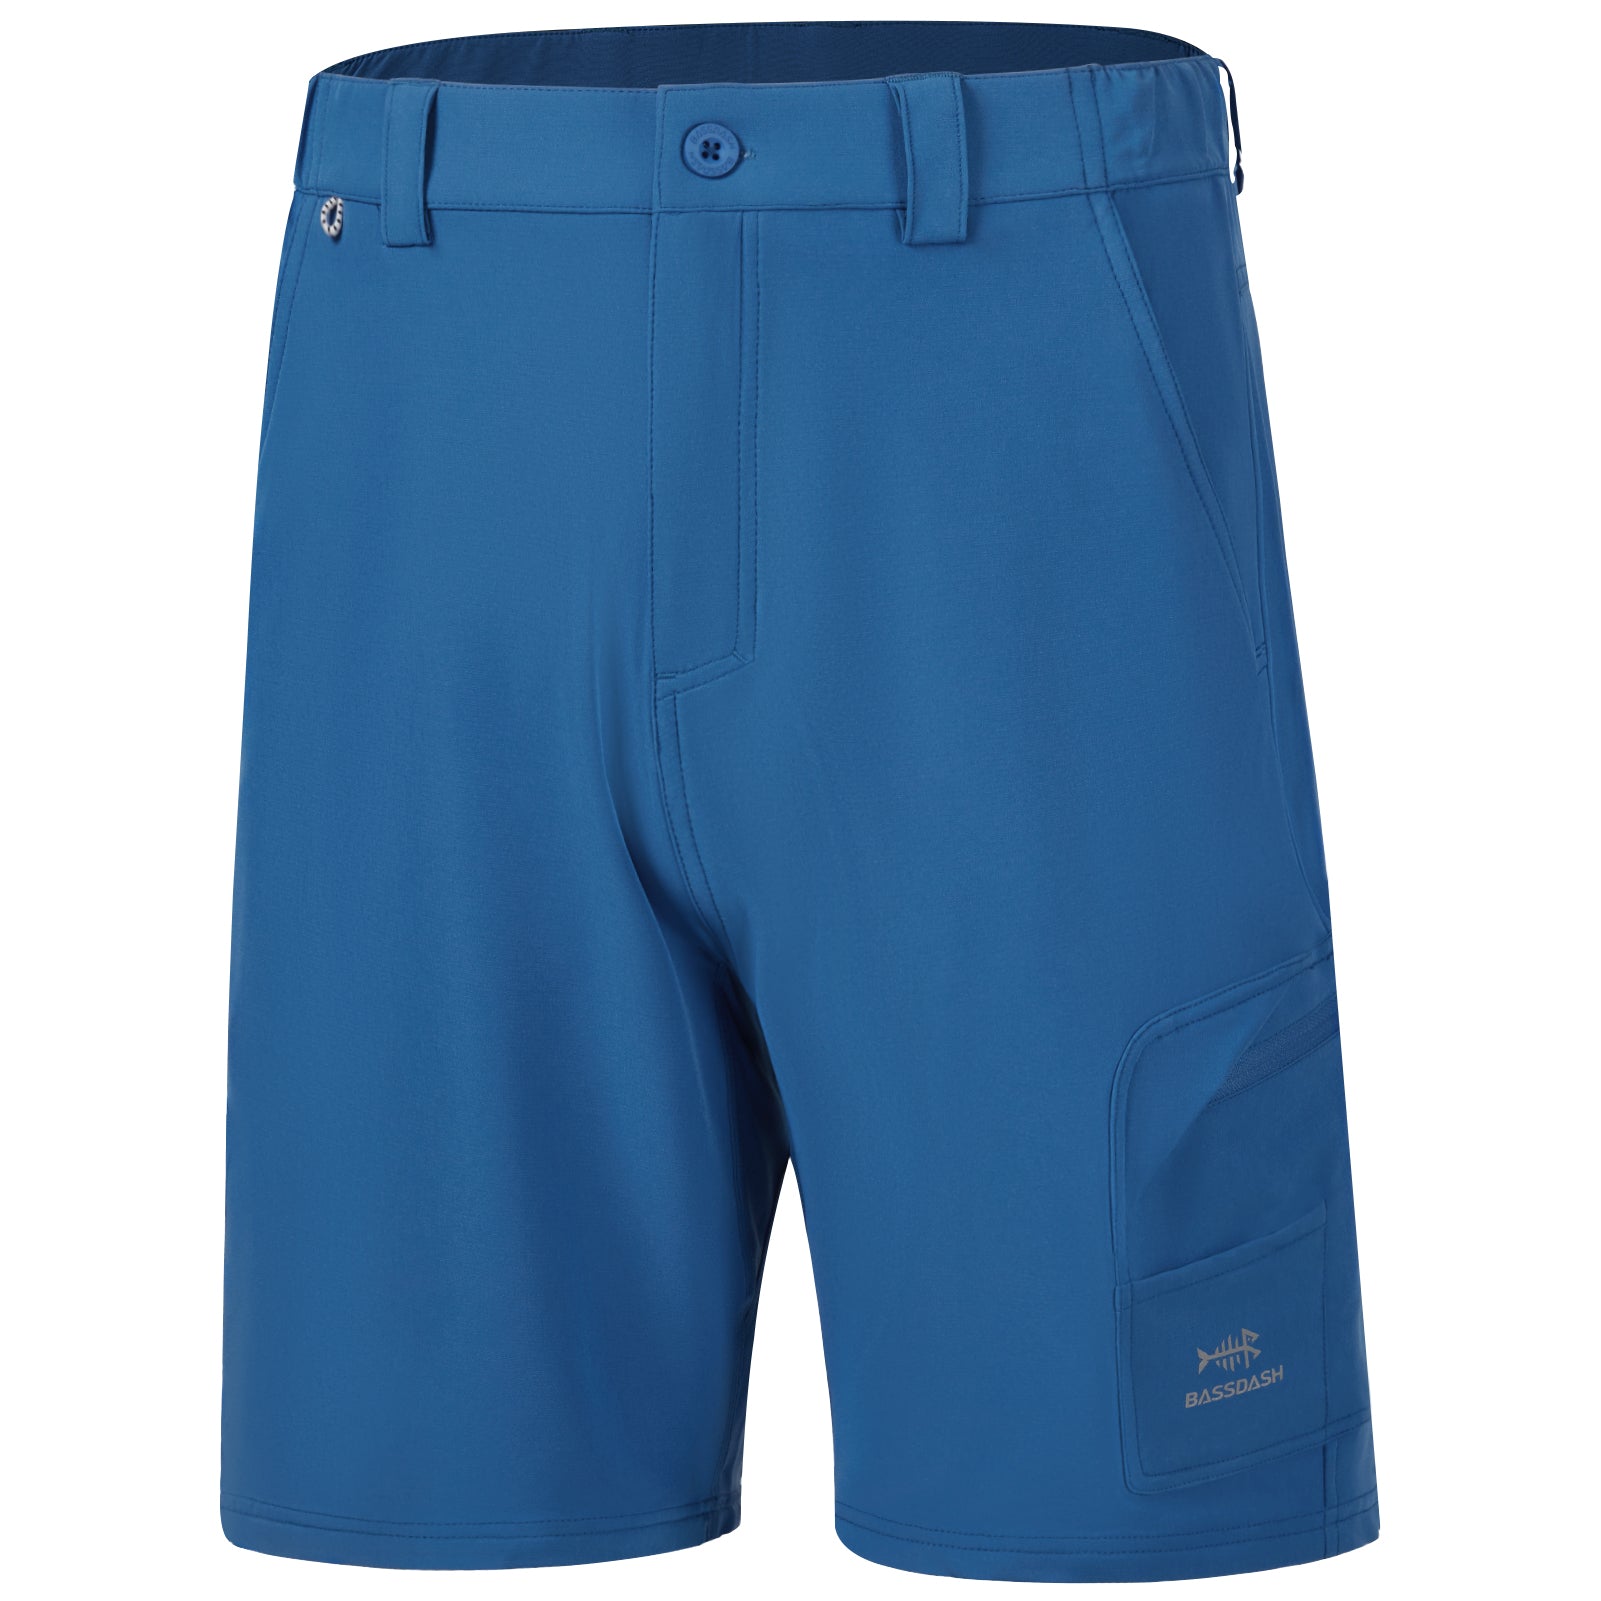 Men's UPF 50+ 10.5” Cargo Shorts Quick Dry Water Resistant FP01M, Snorkel Blue / XL (36-38)W x 10.5L